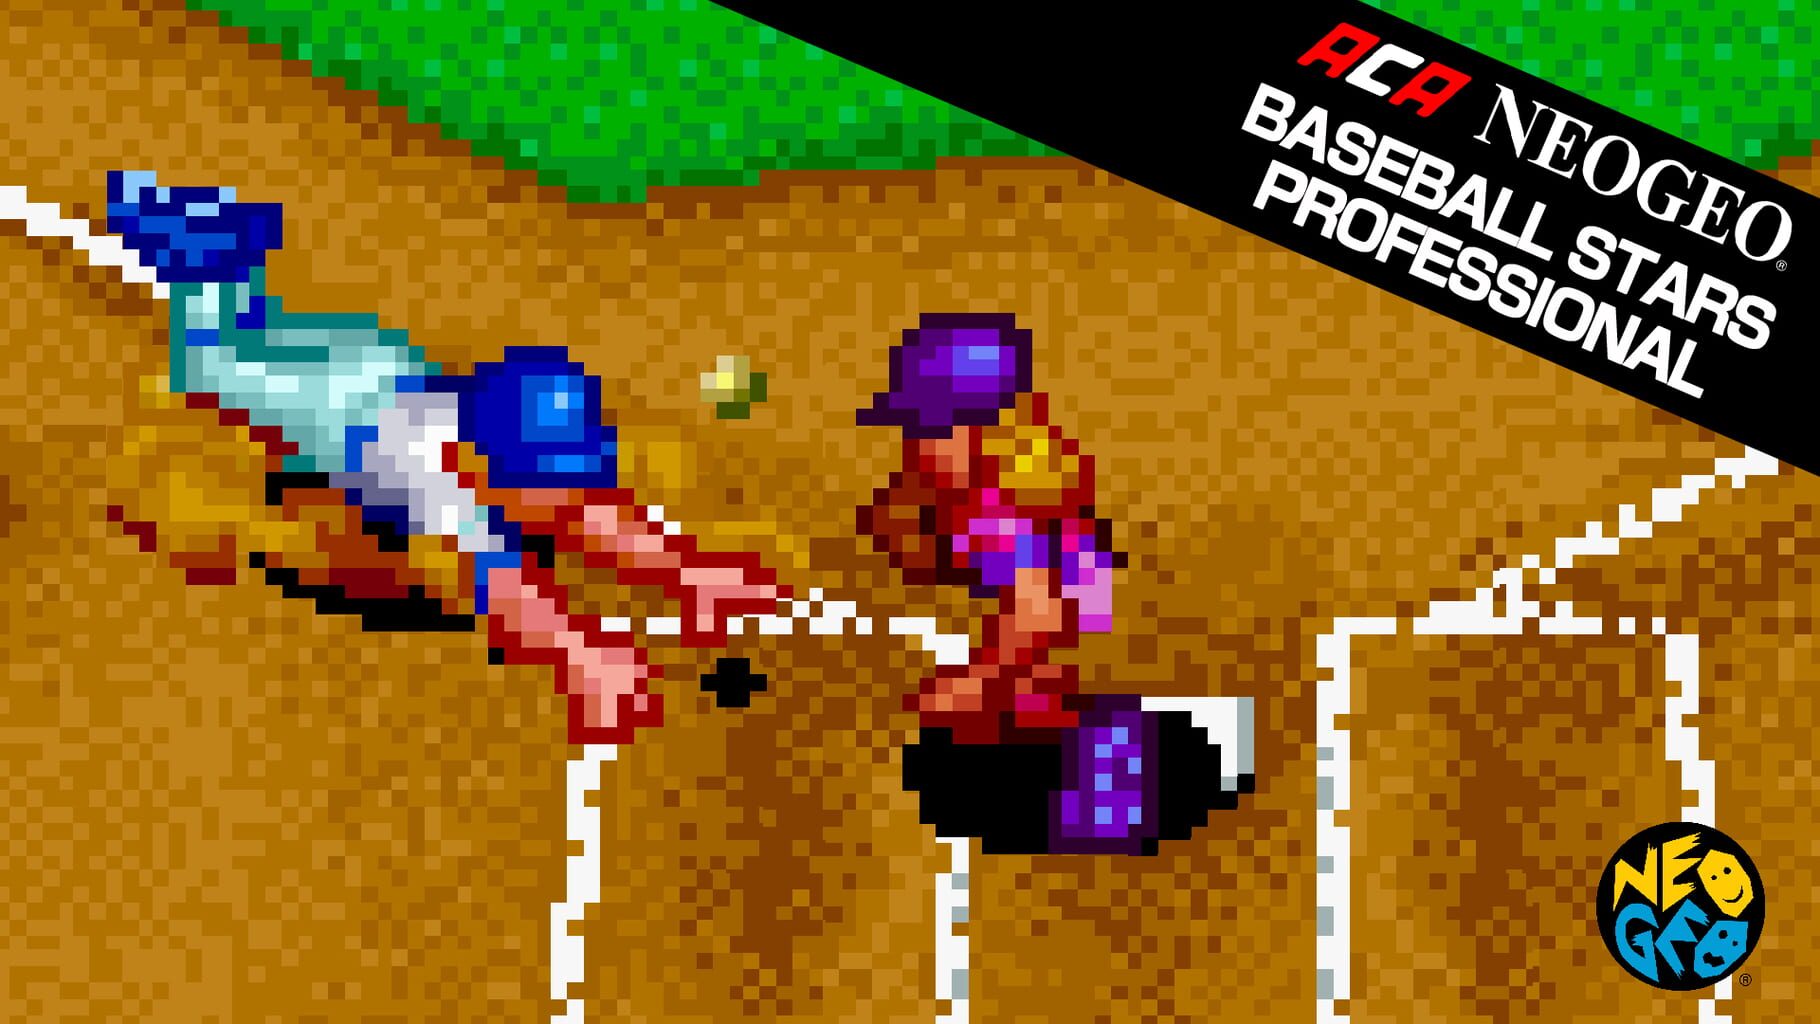 ACA Neo Geo: Baseball Stars Professional artwork